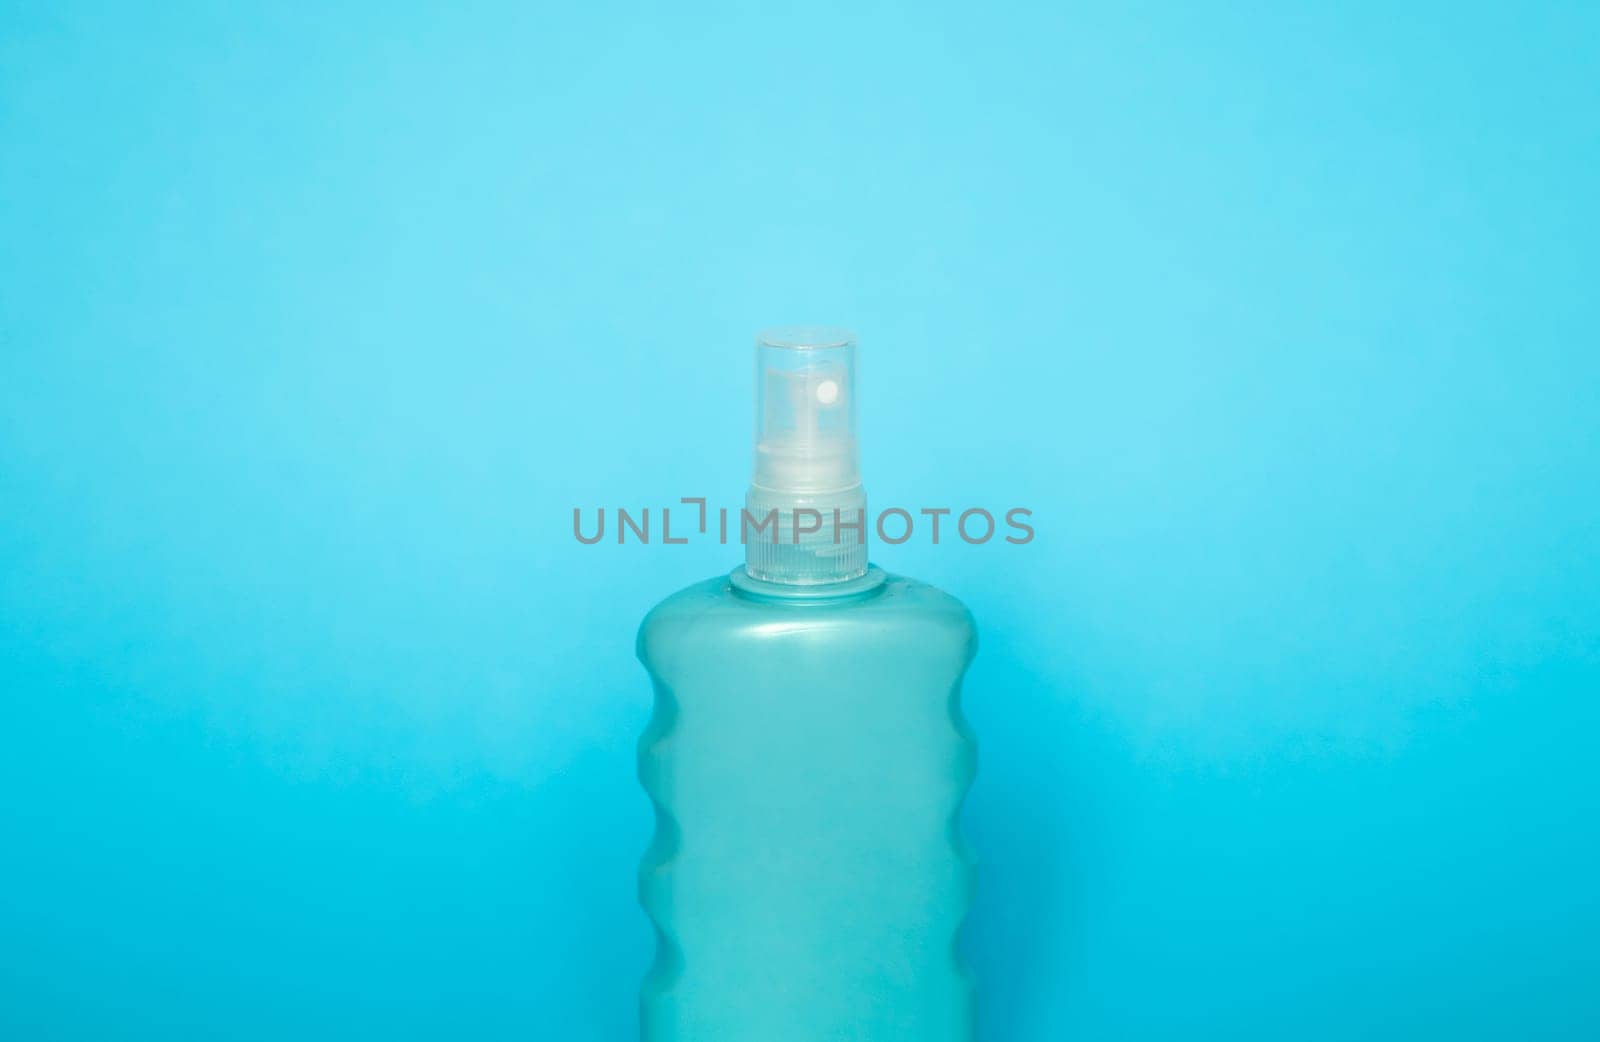 Blue blank unbranded cosmetic plastic bottle for shampoo, gel, lotion, cream, bath foam blue background